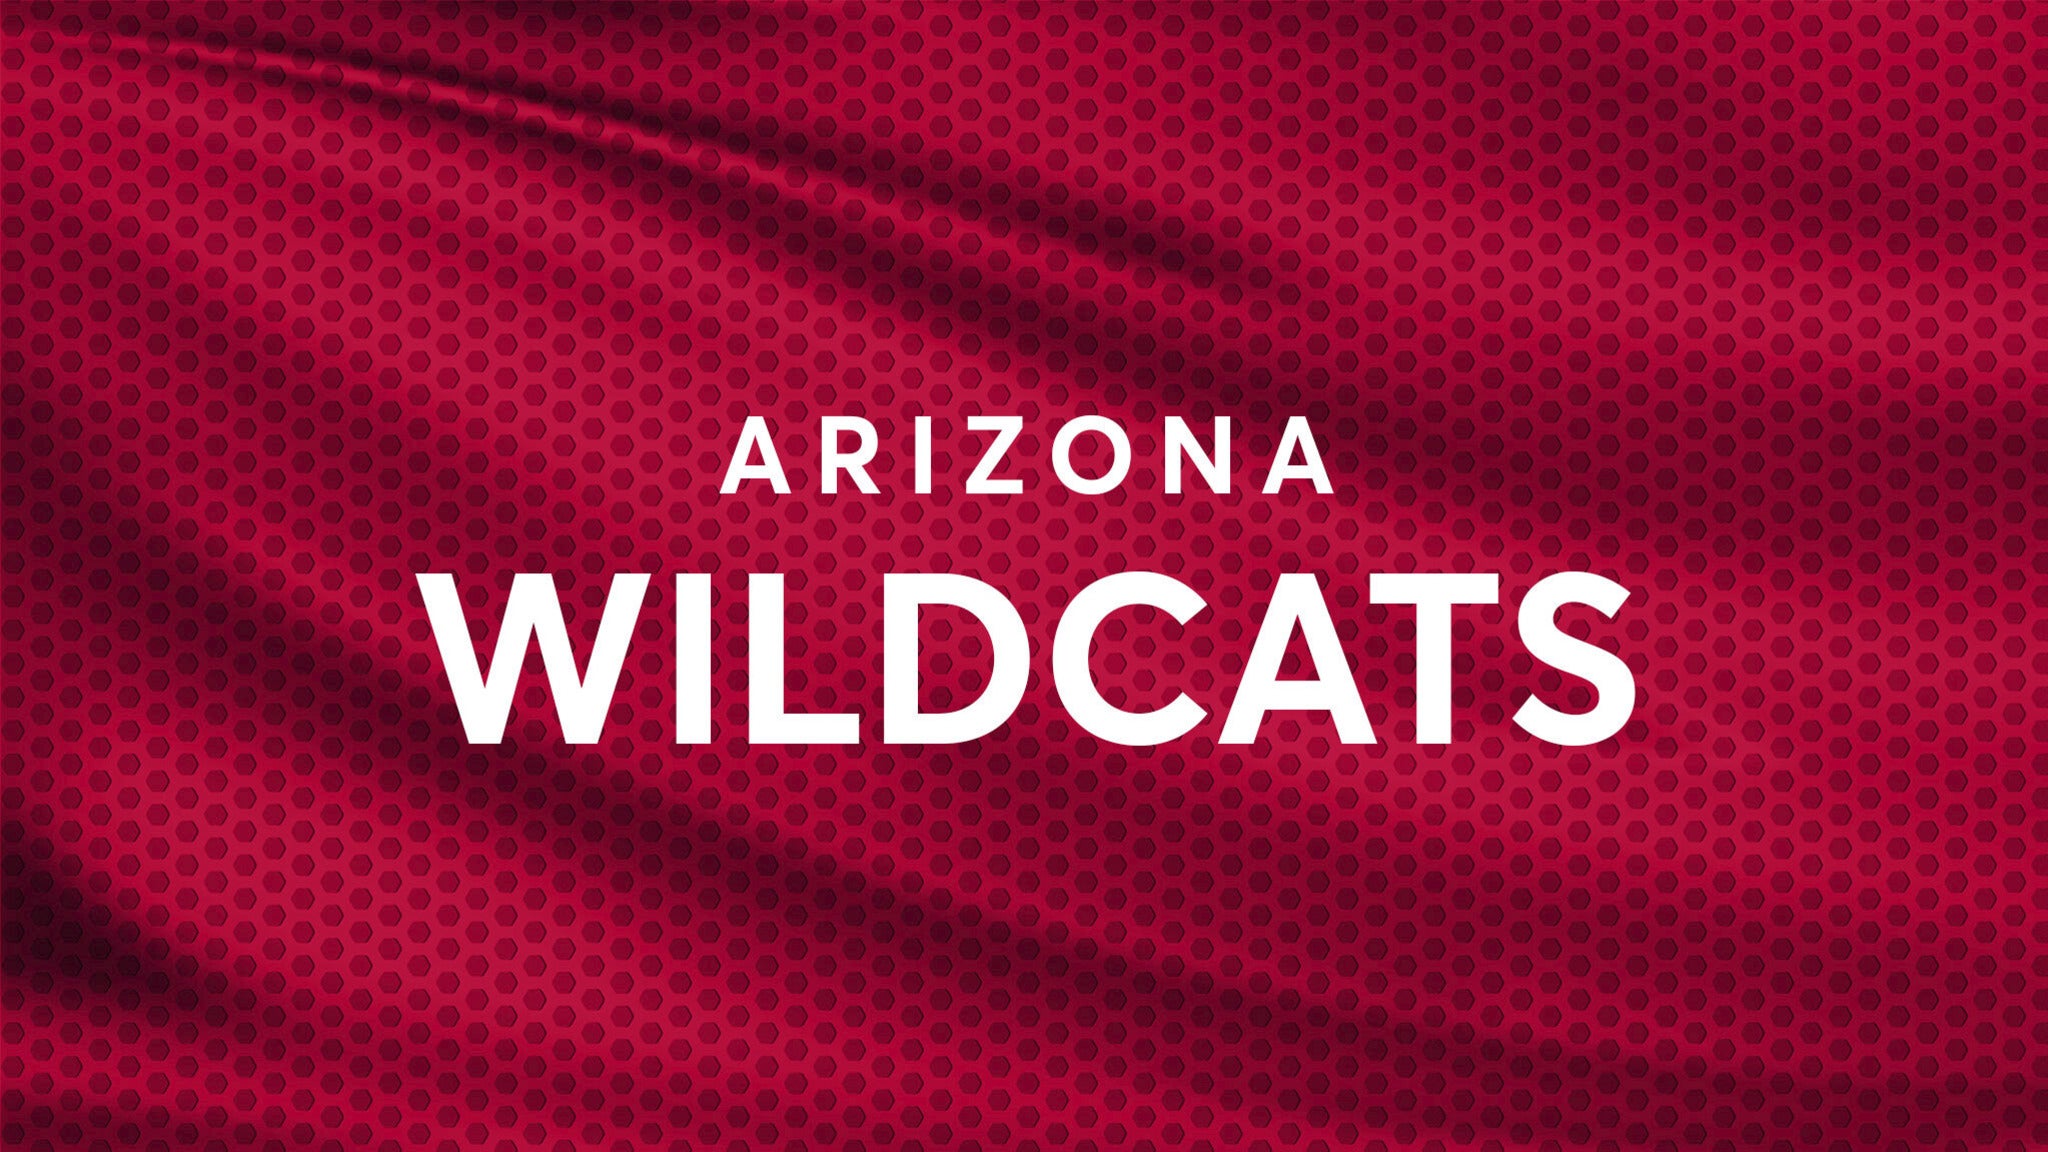 Arizona Wildcats Football vs. Arizona State Sun Devils Football